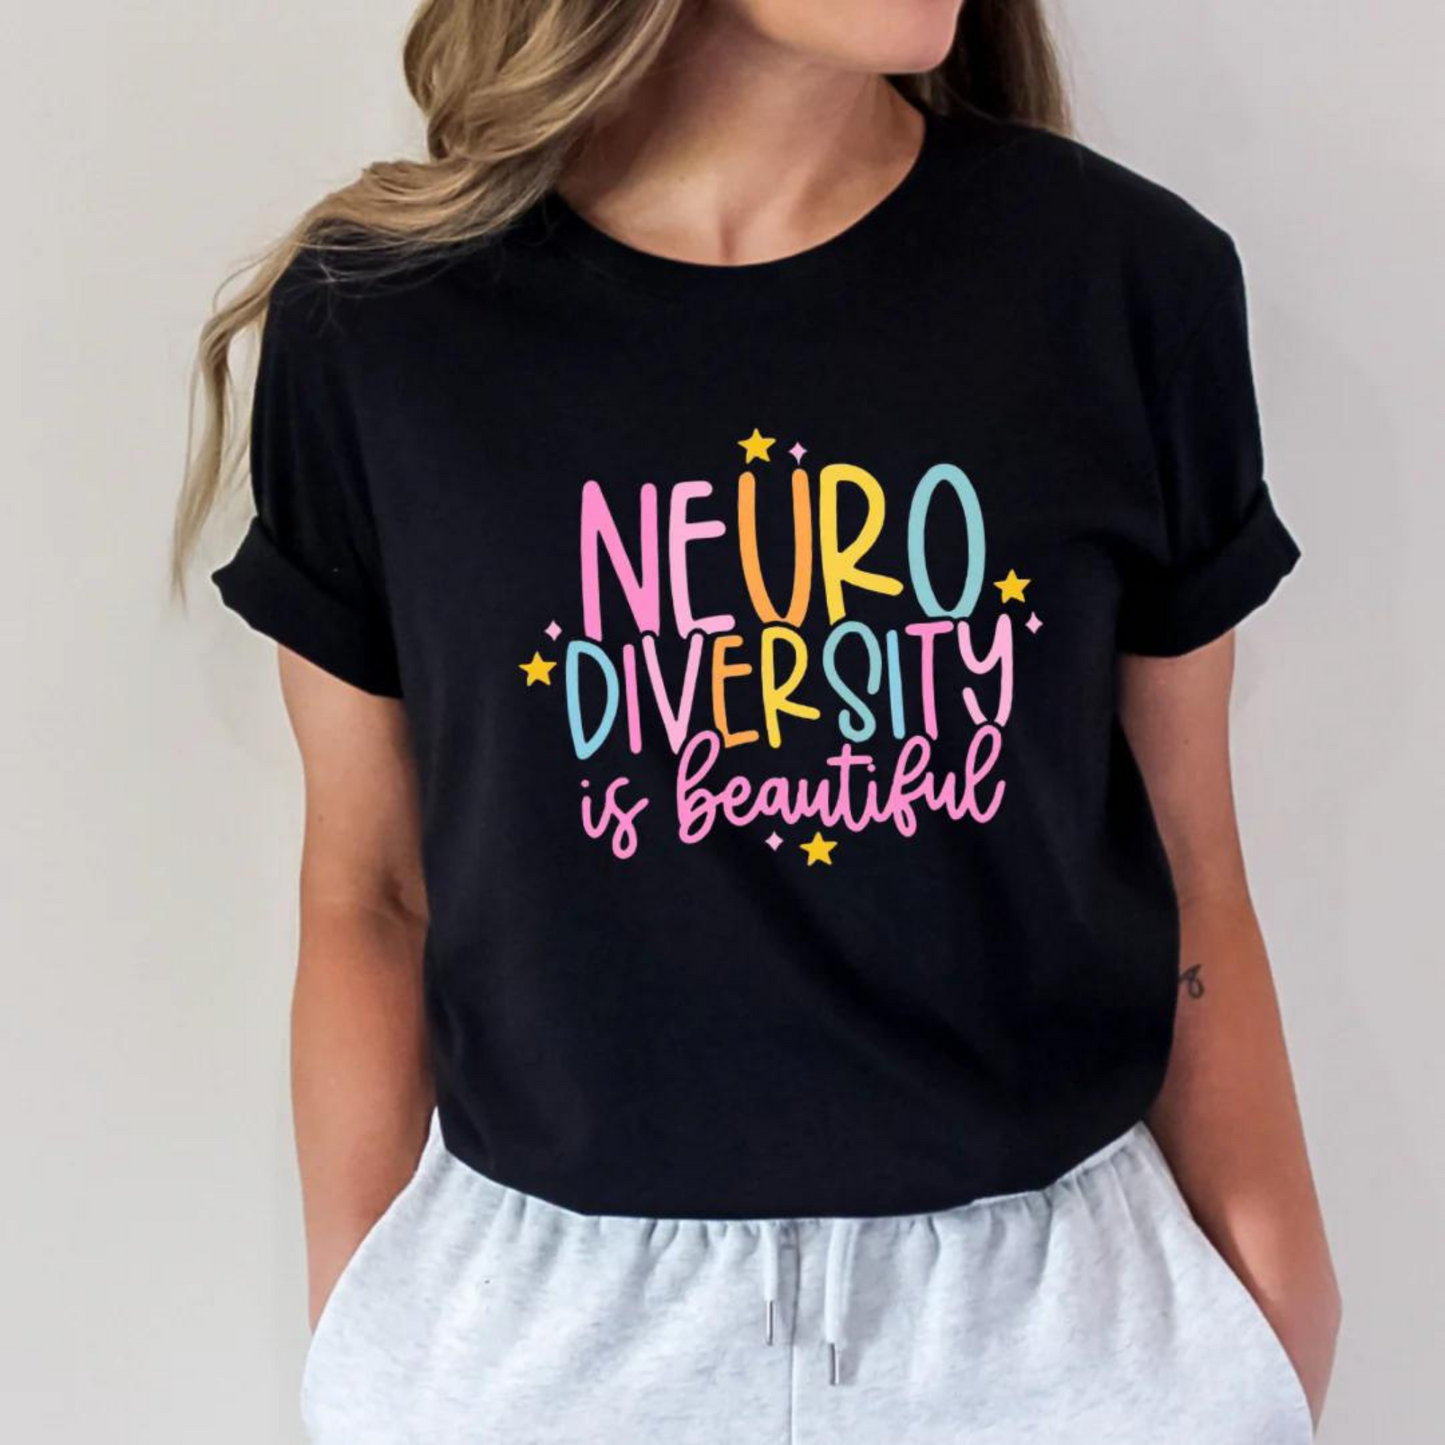 Neurodiversity Shirt Neurodiversity is Beautiful Shirt Mental Health Advocacy Clothing Positivity Shirt Inclusion Shirt Celebrate Diversity